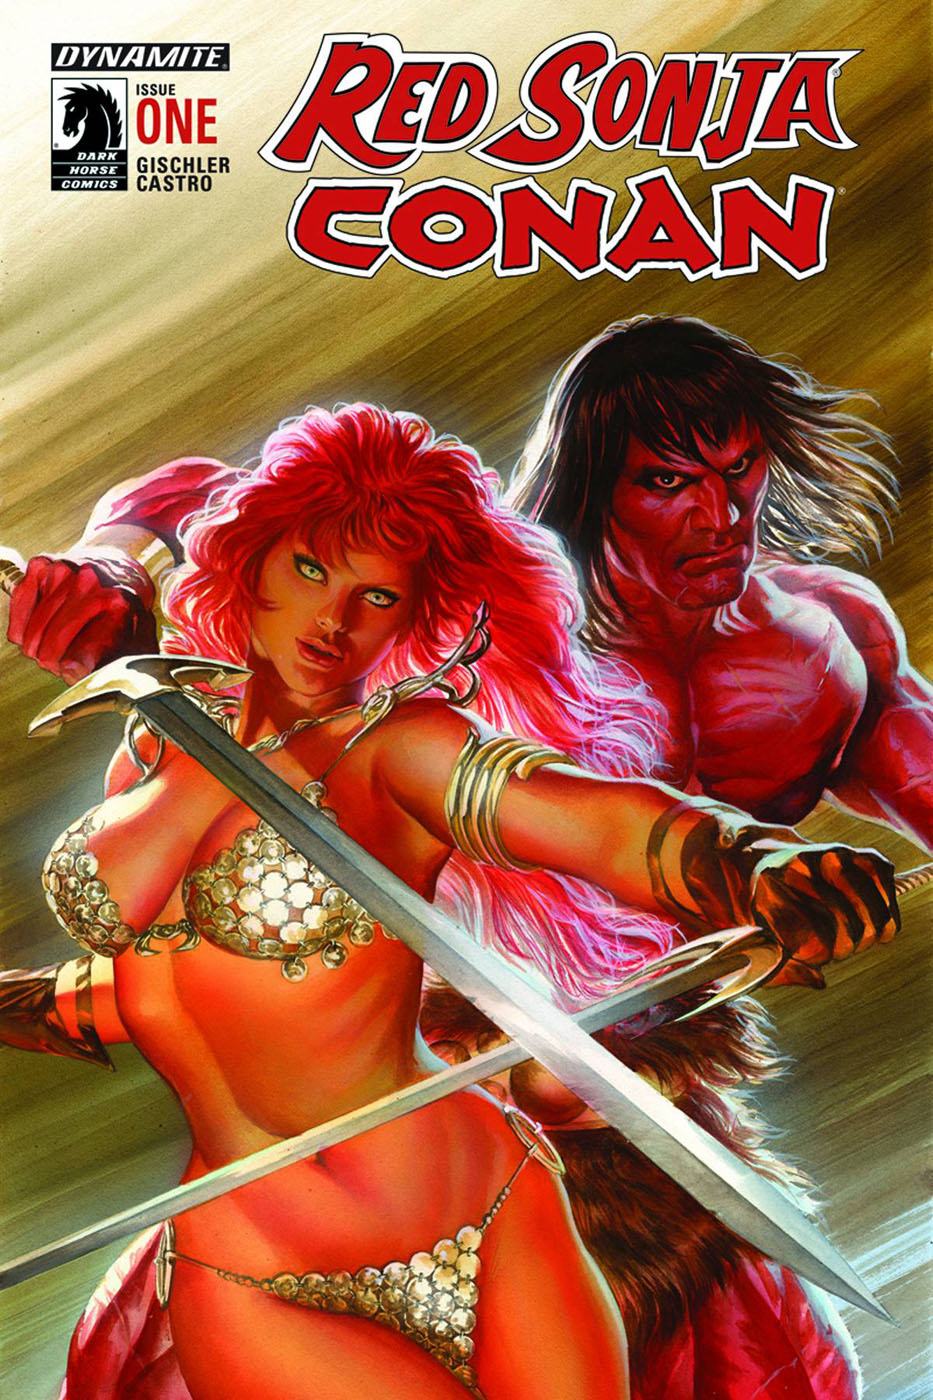 RED SONJA / CONAN #1